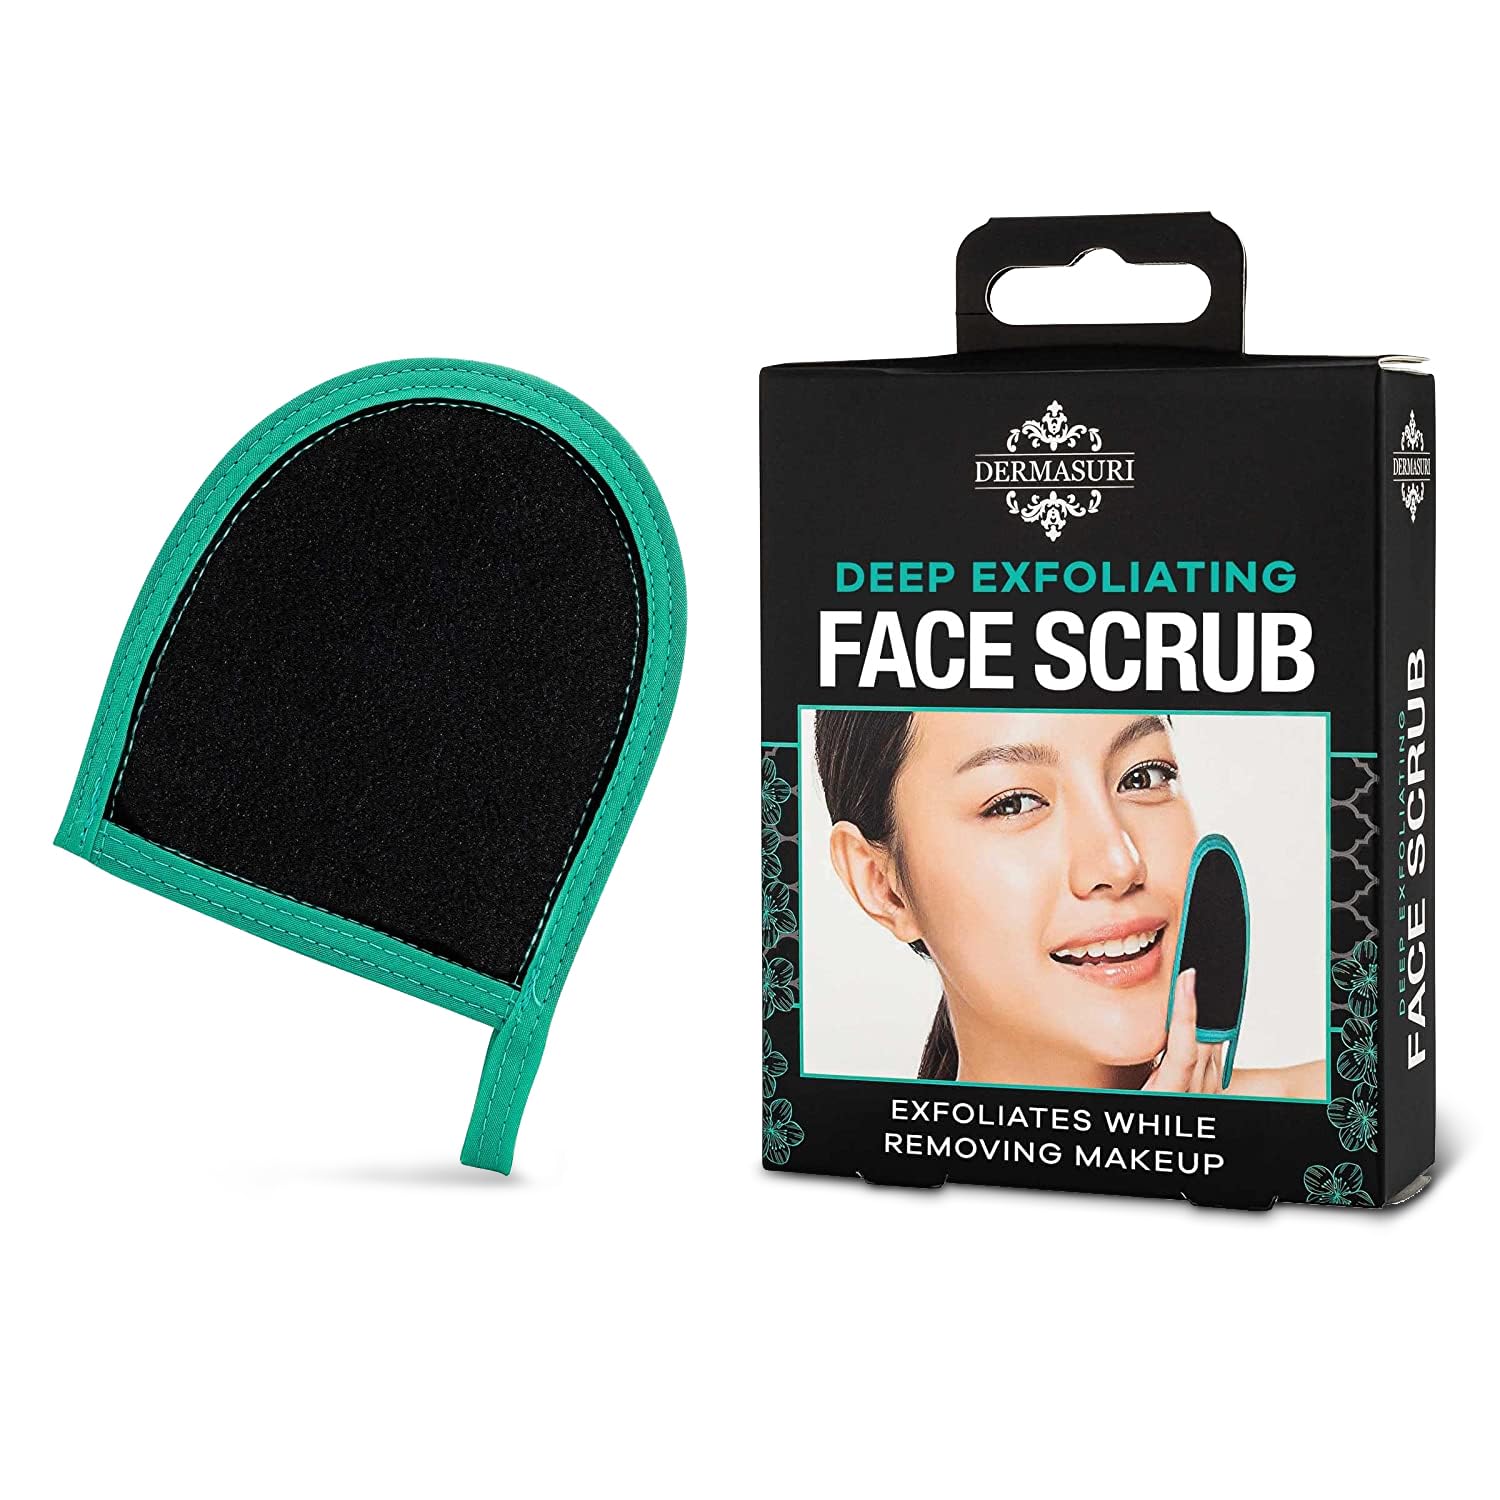 Dermasuri Deep Exfoliating Face Scrub and Body Scrub Mitt - Facial Exfoliator & Skin Cleanser - Part of the Best Skincare Kit for Women & Men - Cleanse Dead or Dry Skin - Face Exfoliation Tool